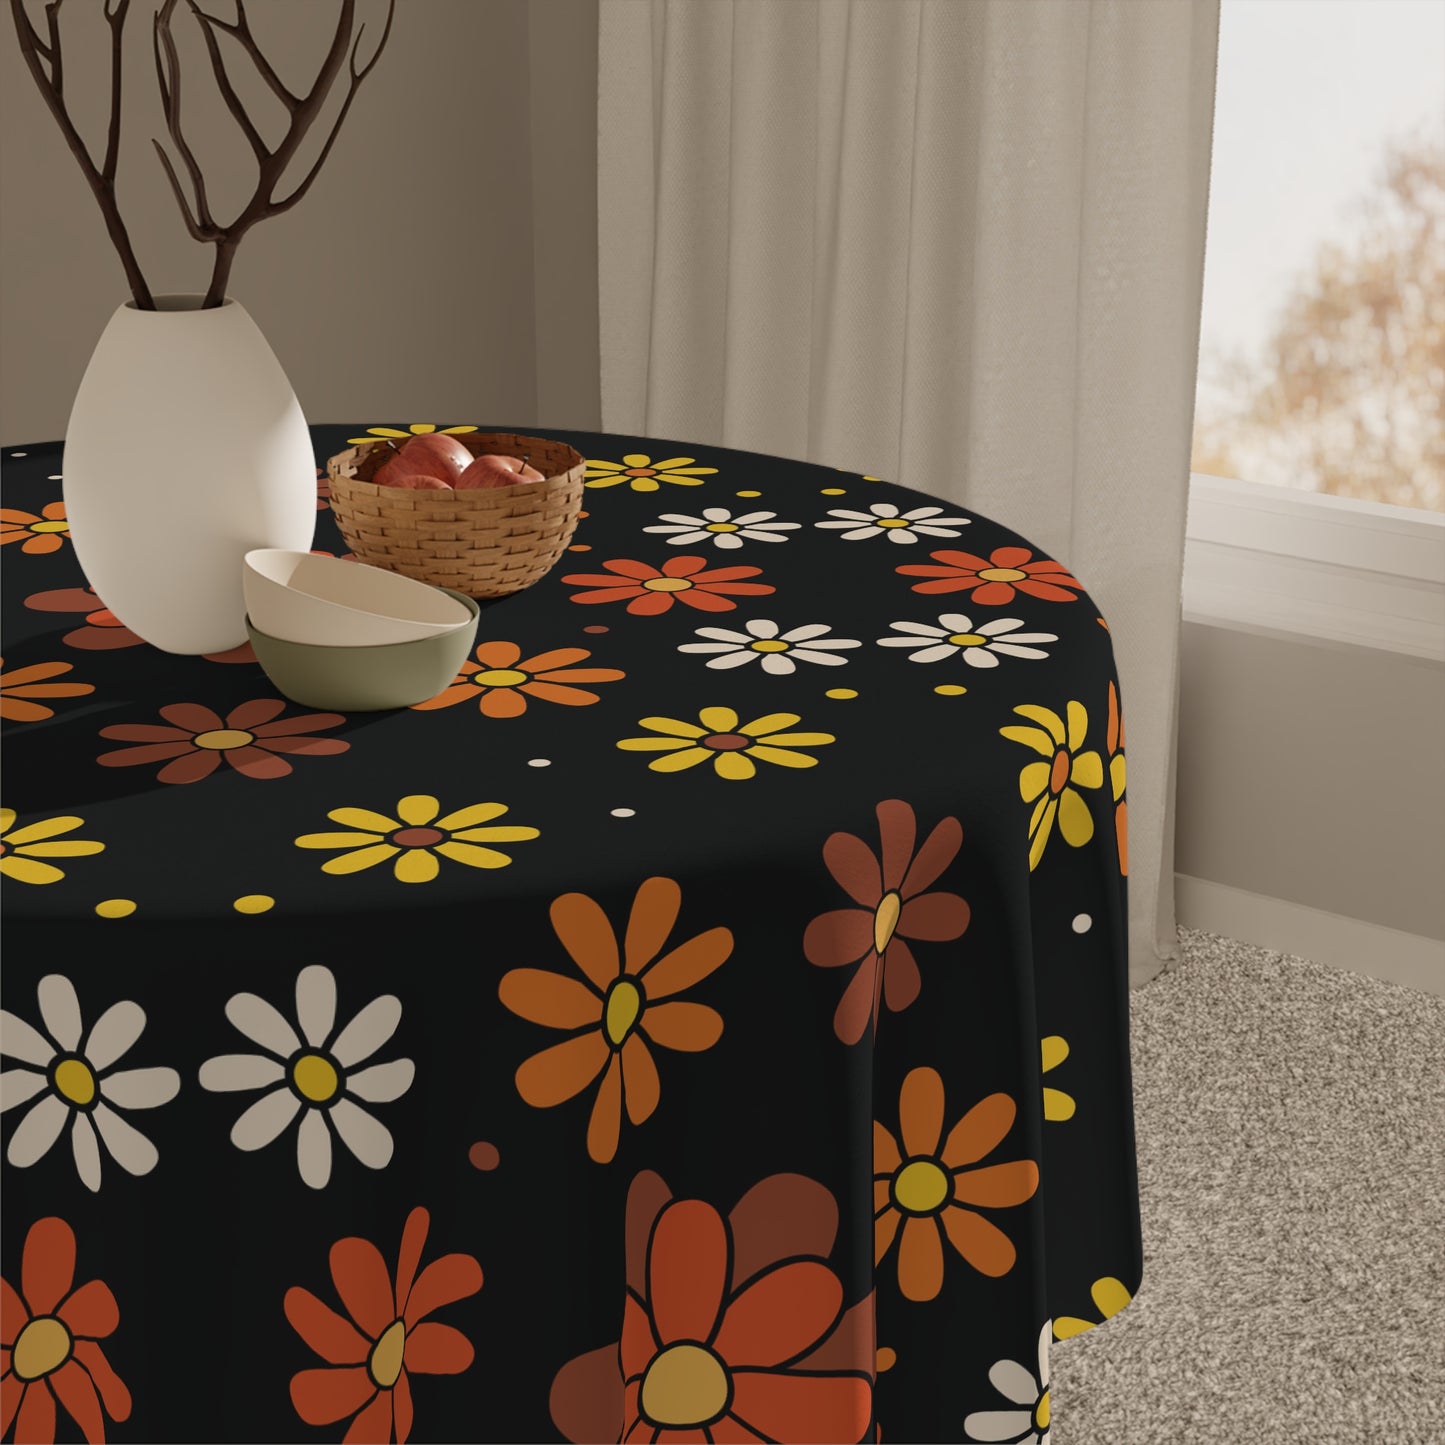 Retro 60s 70s Groovy Mod Daisy Floral Mid Century Black, Brown & Orange Tablecloth